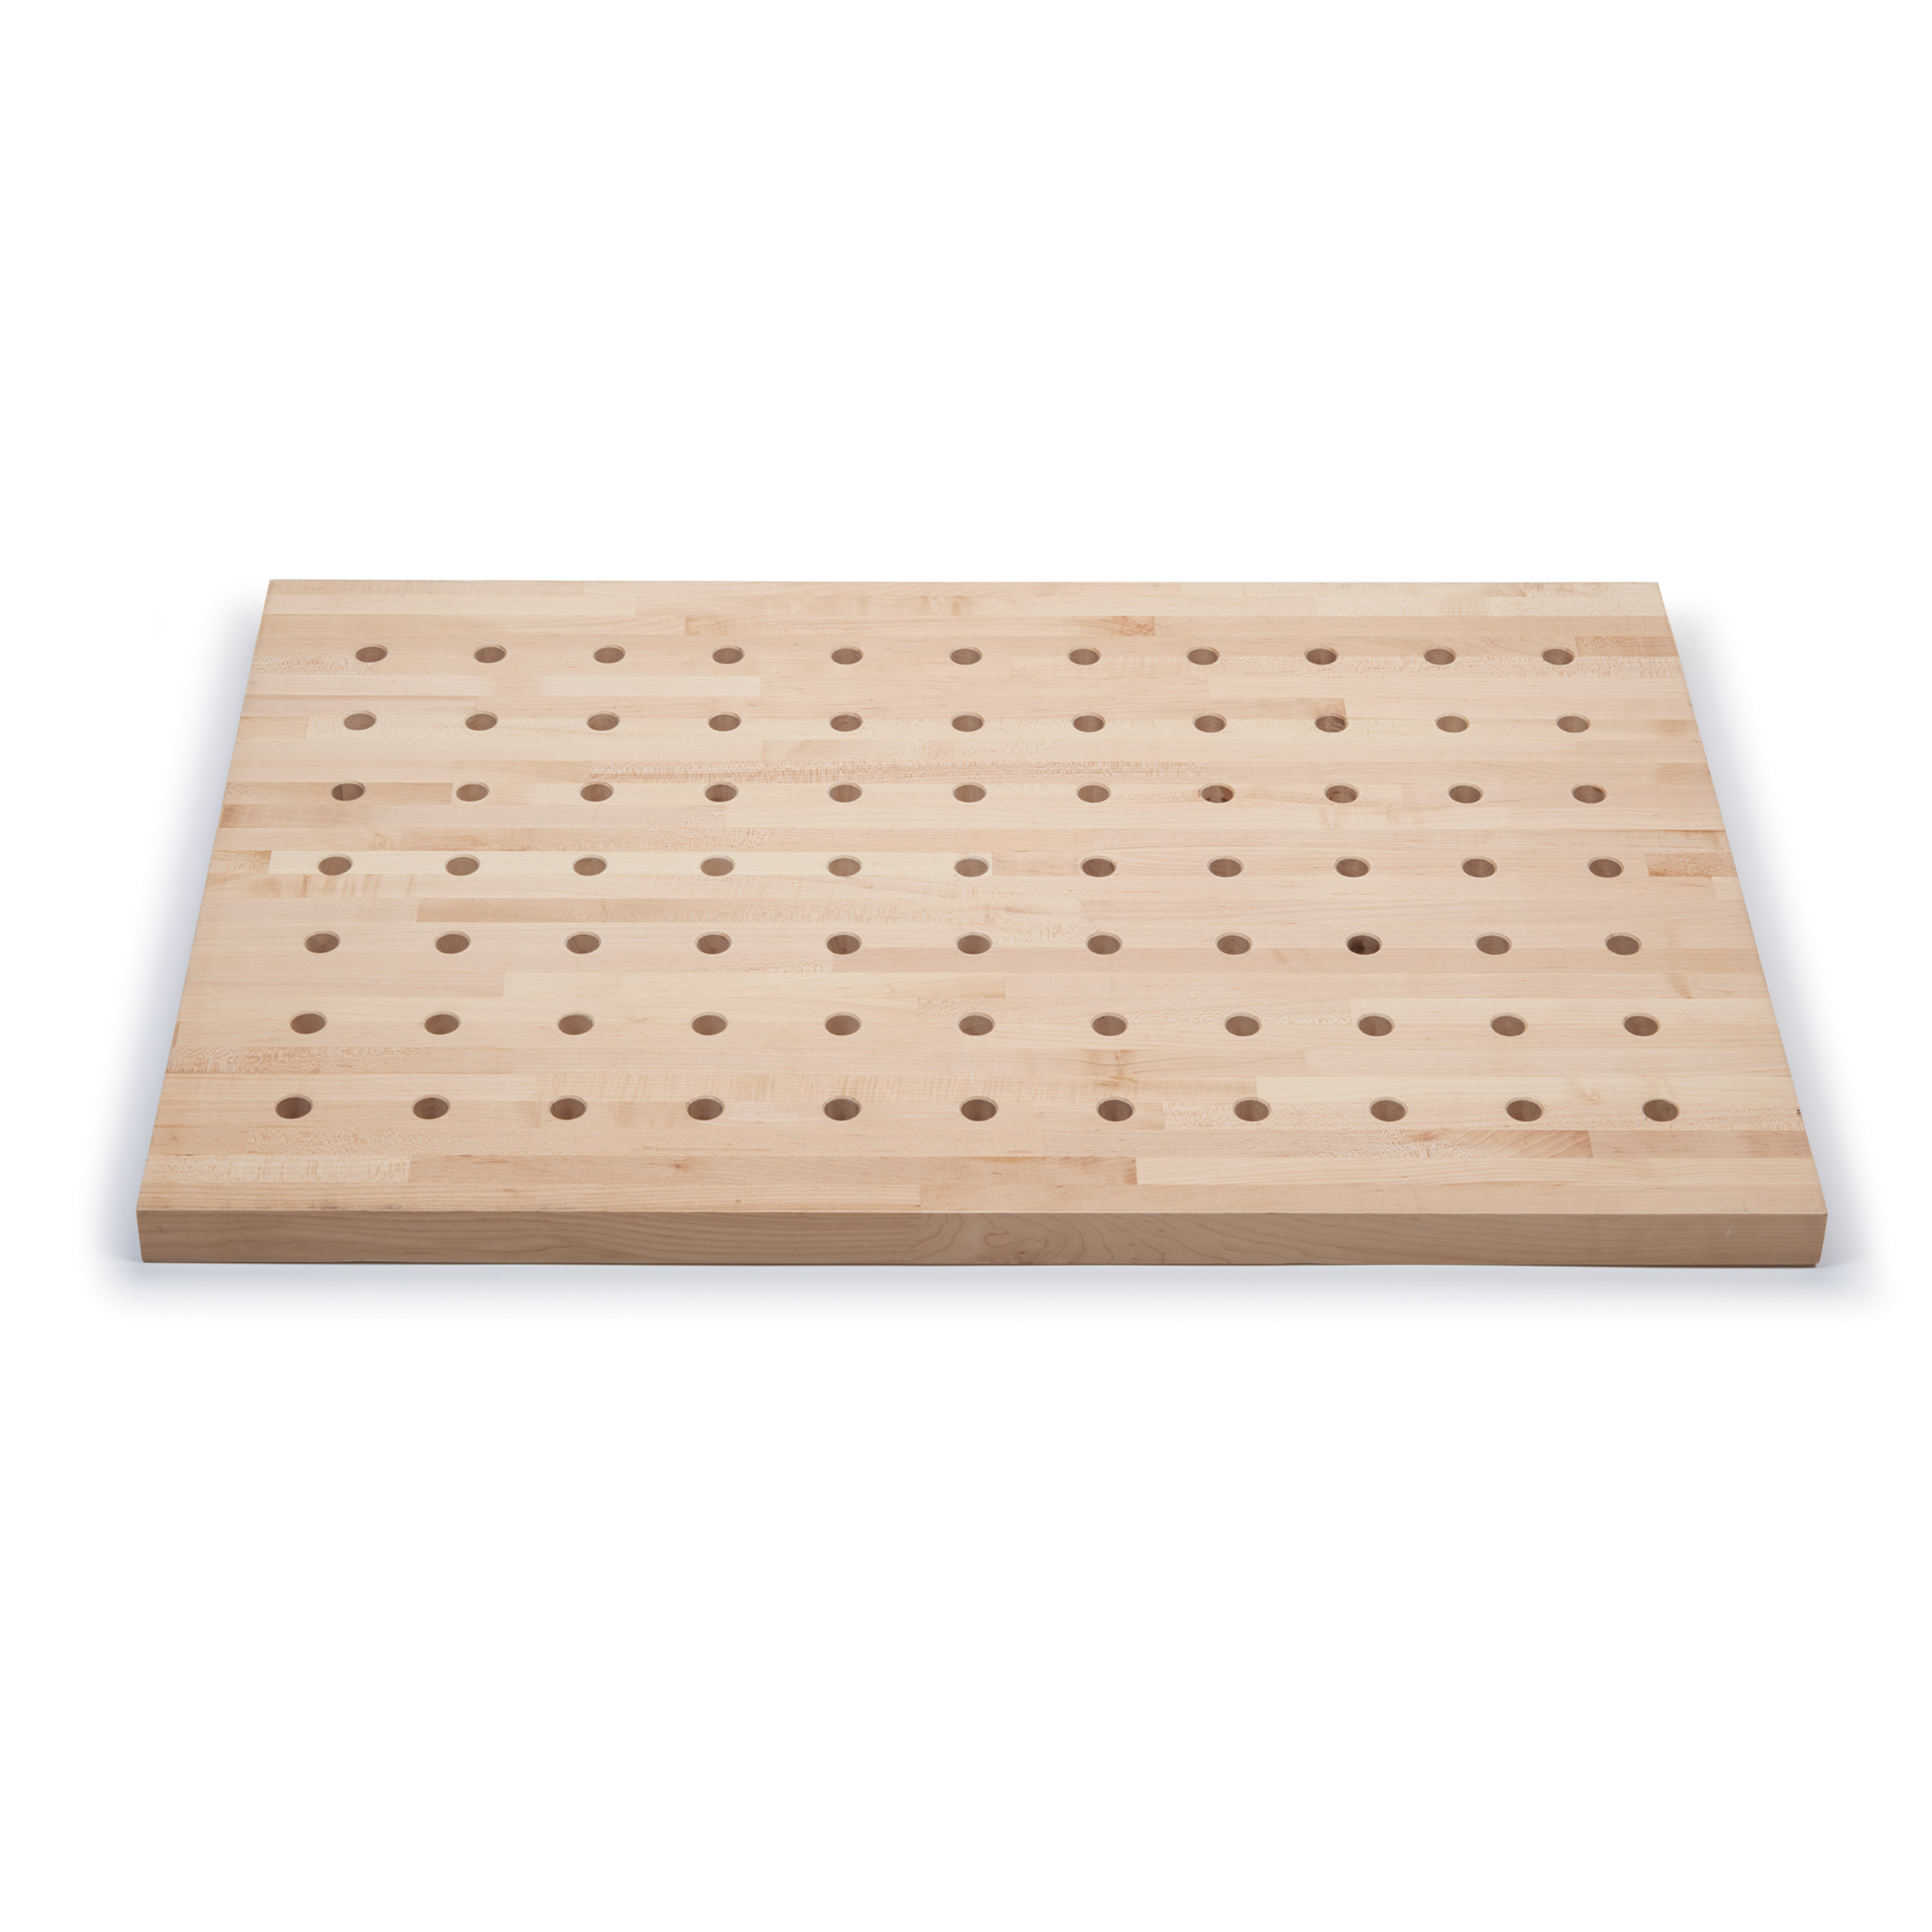 36x25 Premium Hardwood Peg Table Top